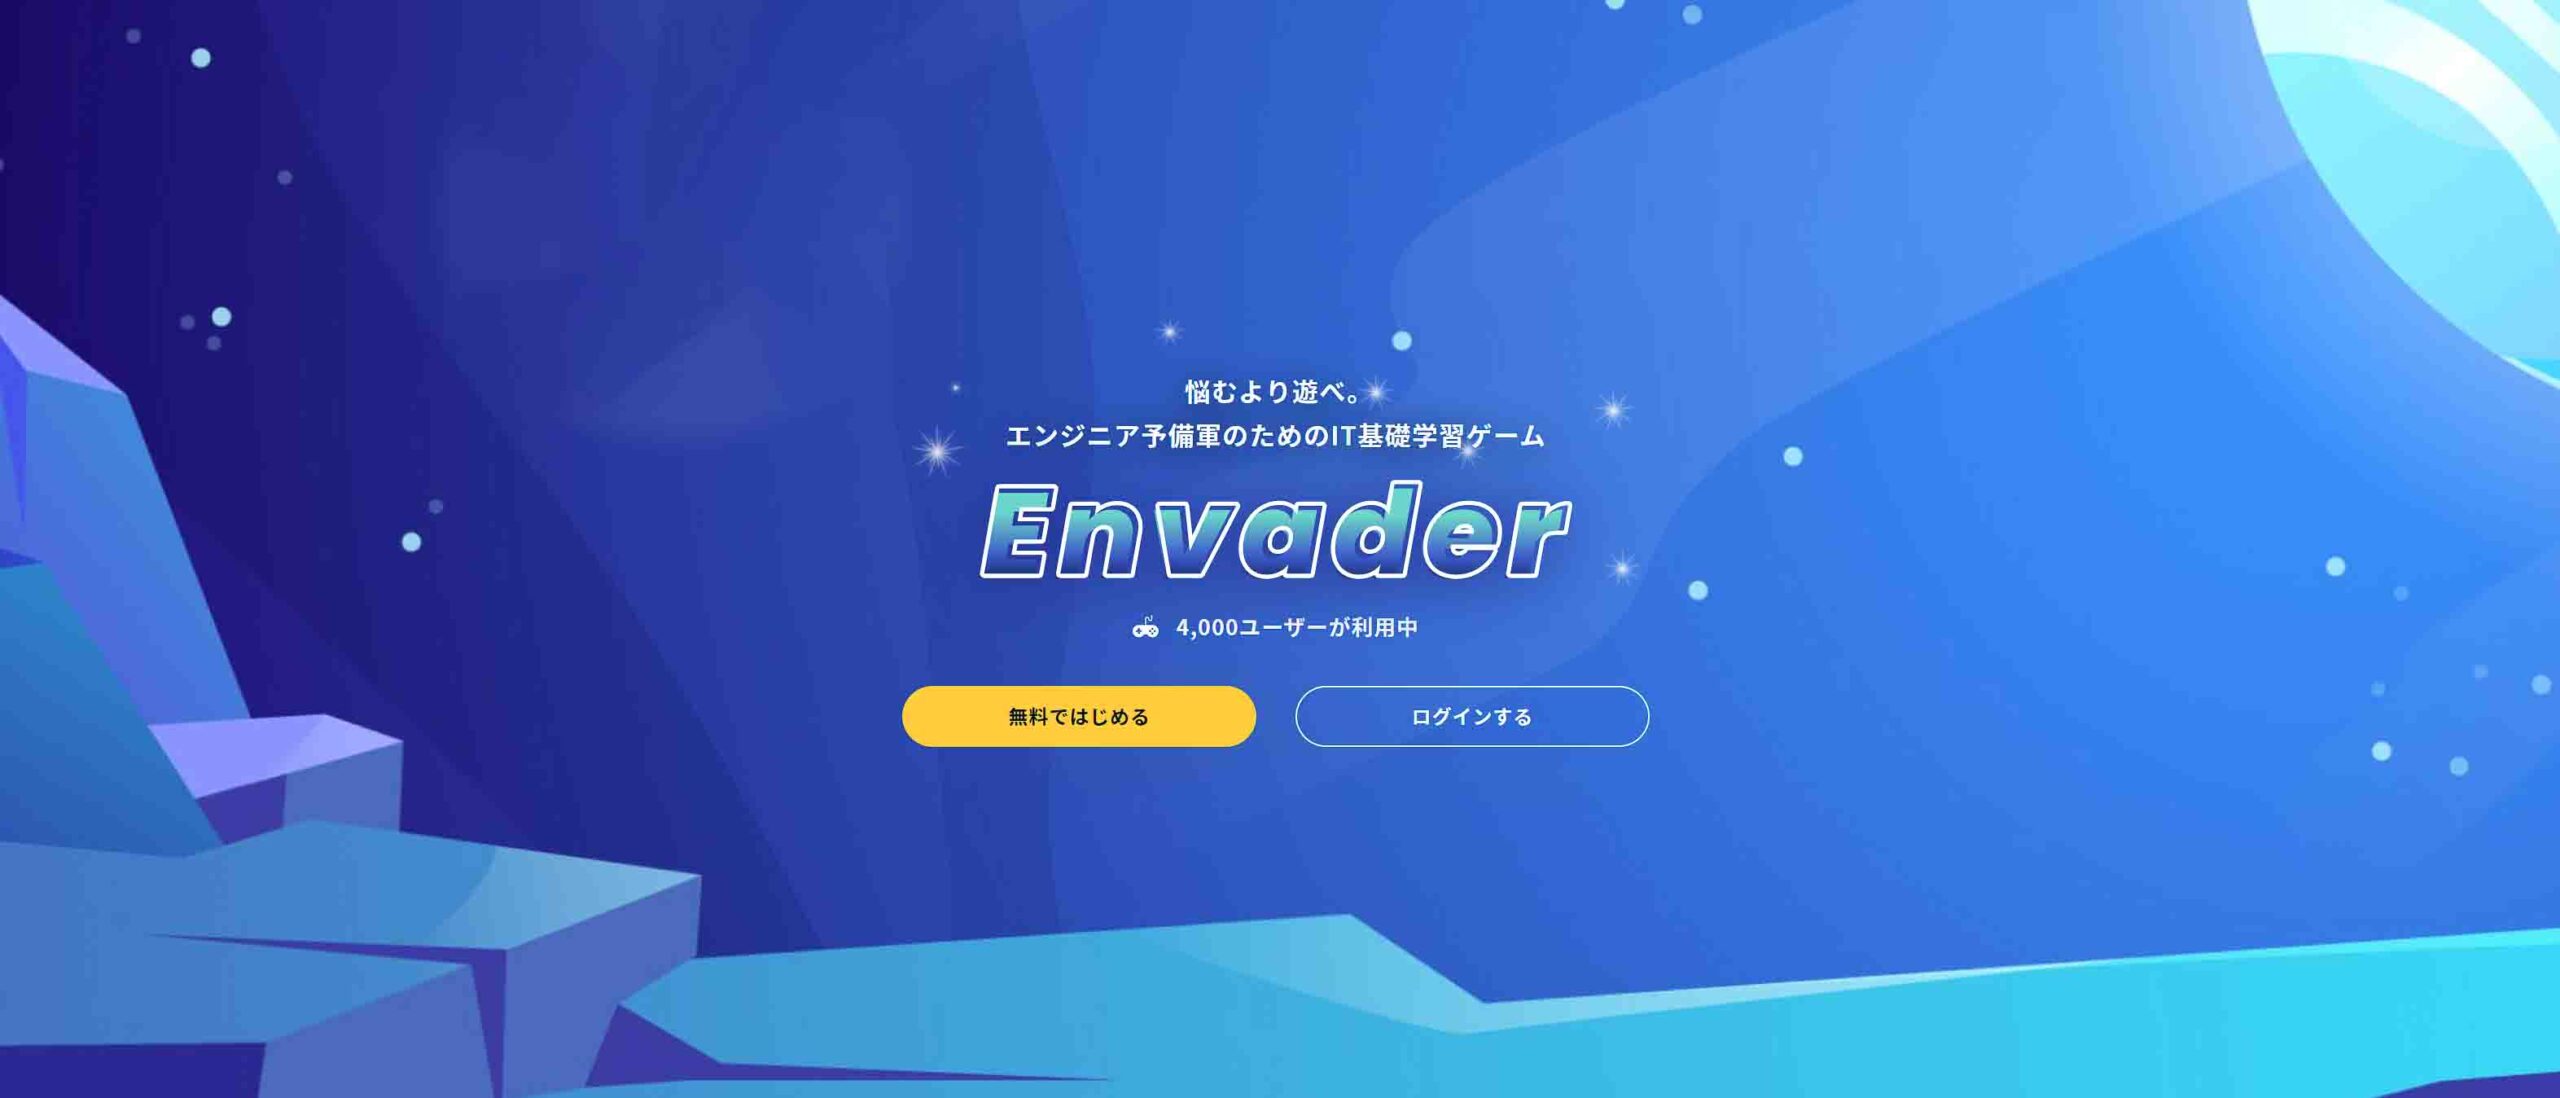 Envaderはインフラエンジニアの何から勉強したらいいのか分からない人向けの学習サイト